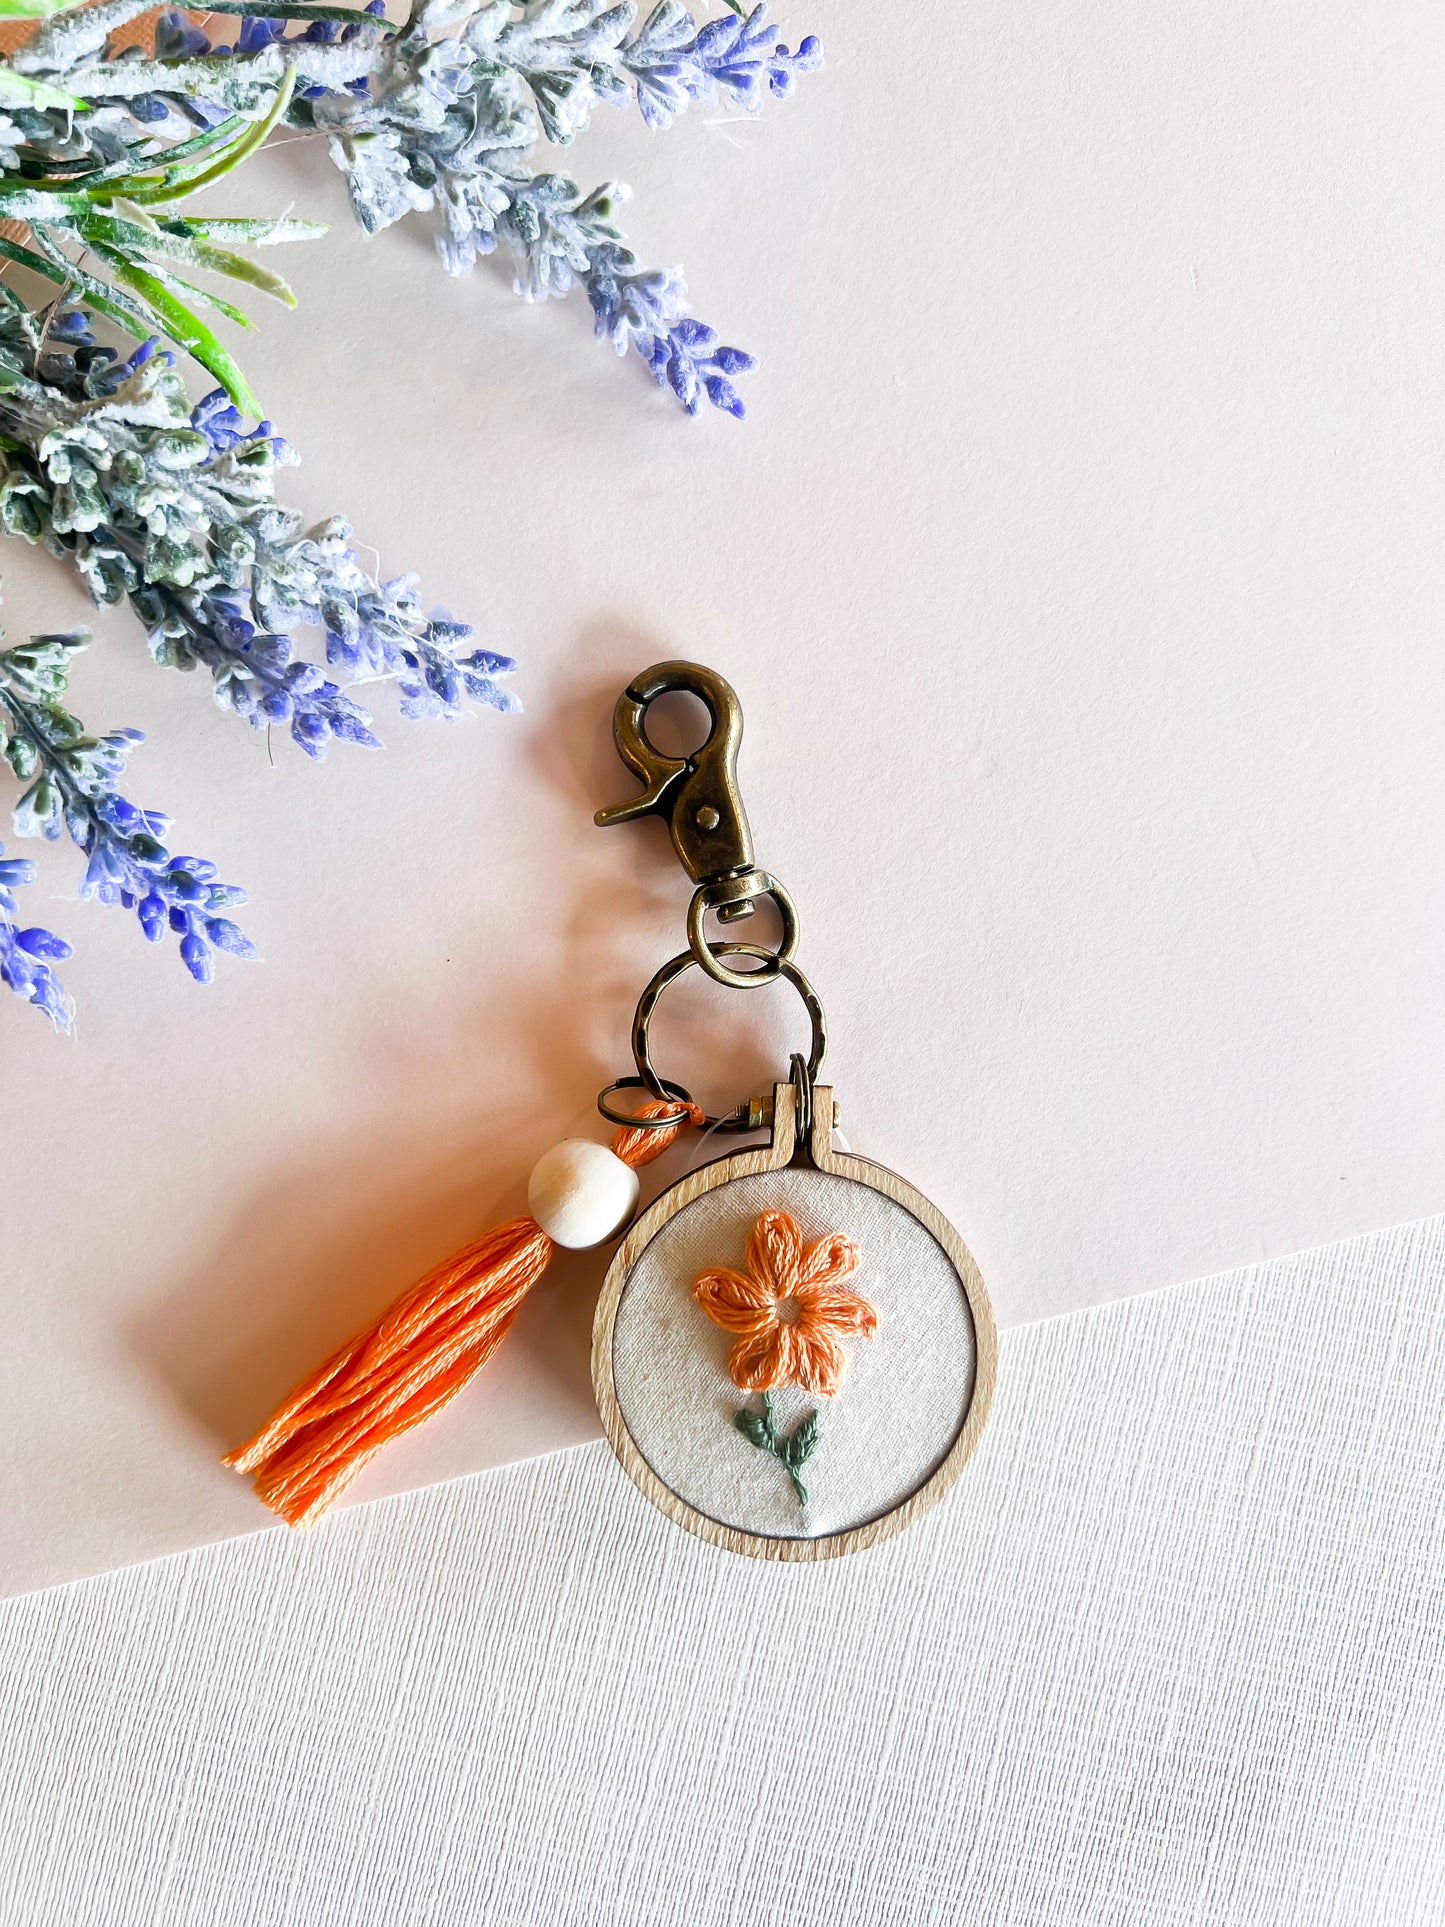 Hand Embroidered Floral Keychains | Handmade Flower Keychain | Boho Natural Wood Thread Tassel